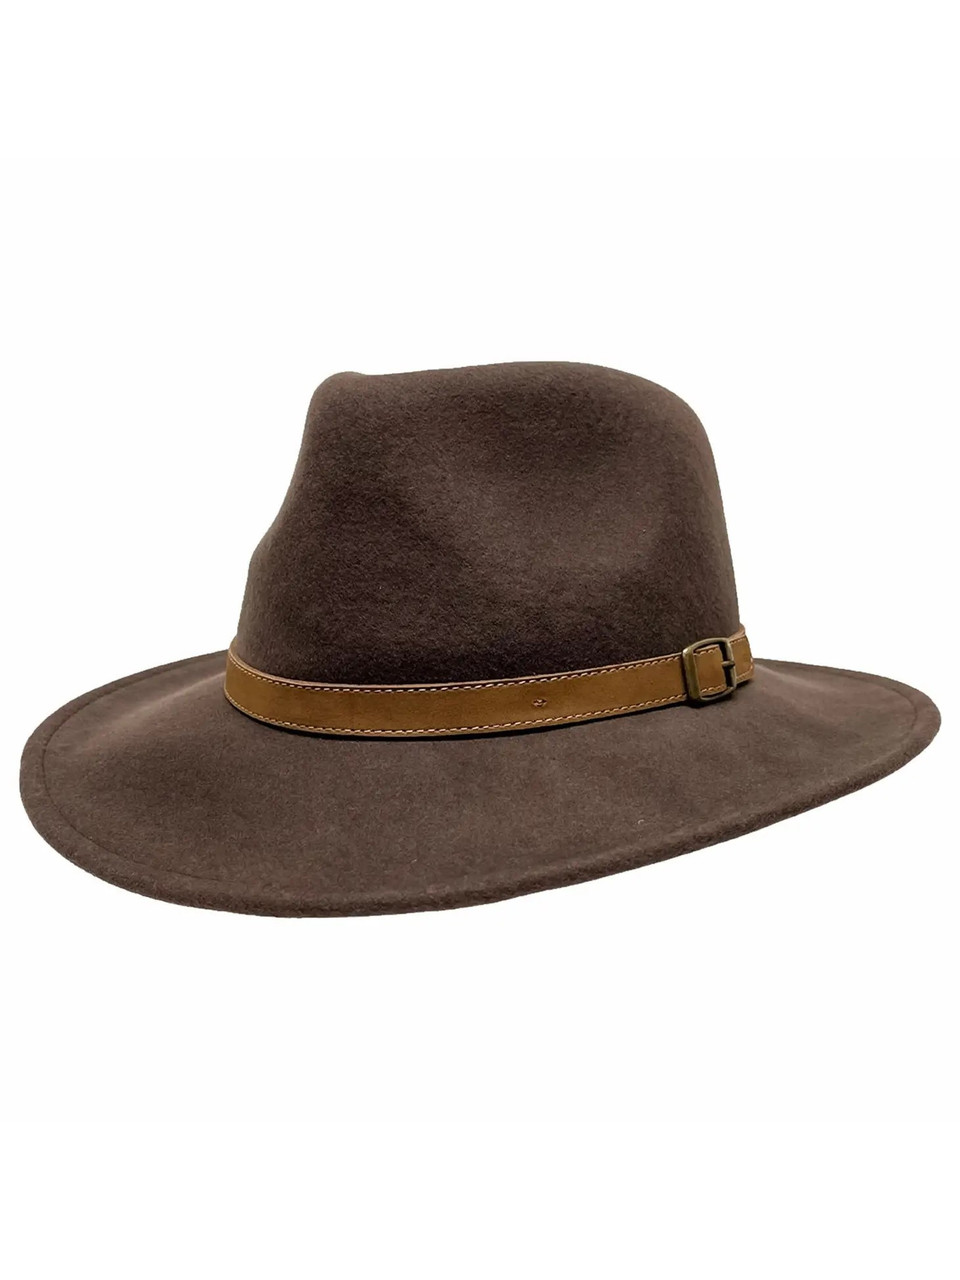 Boondocks Felt Cowboy Hat - Brown